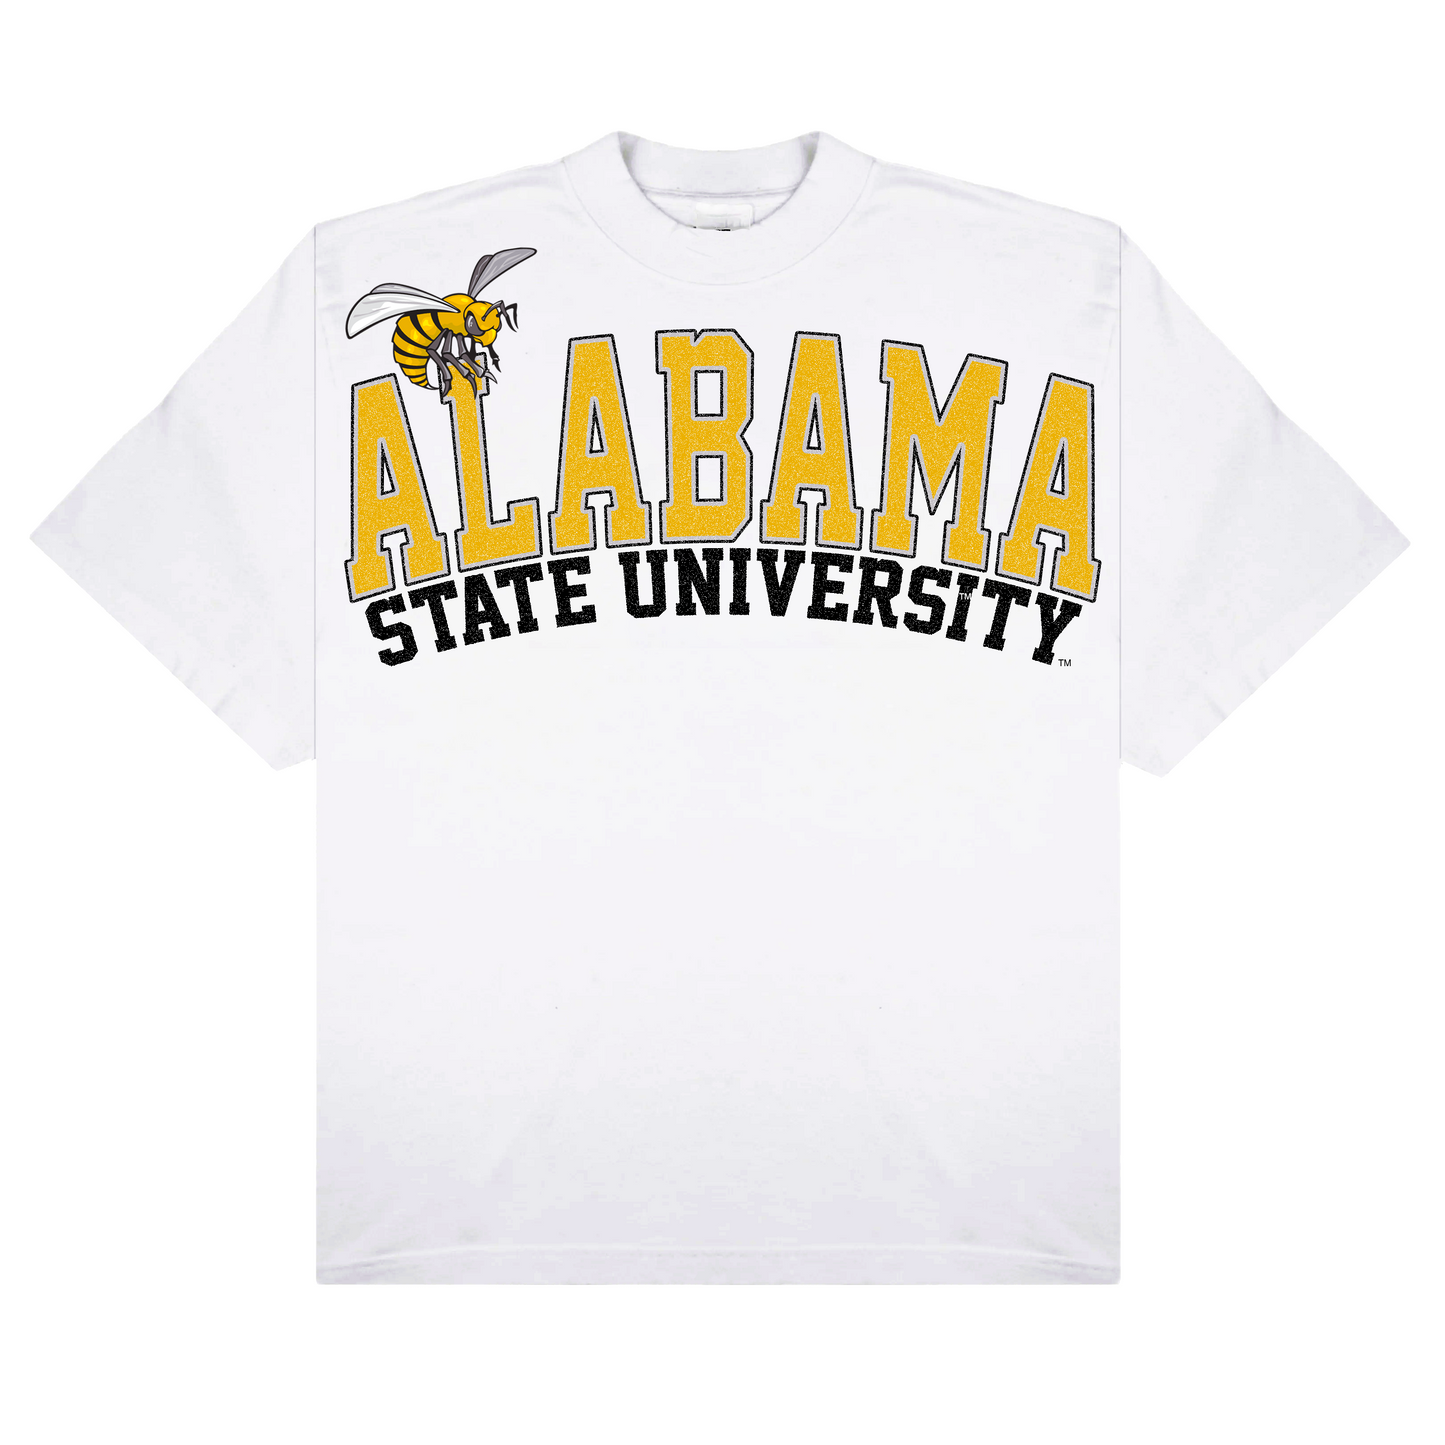 Alabama State University Tshirt